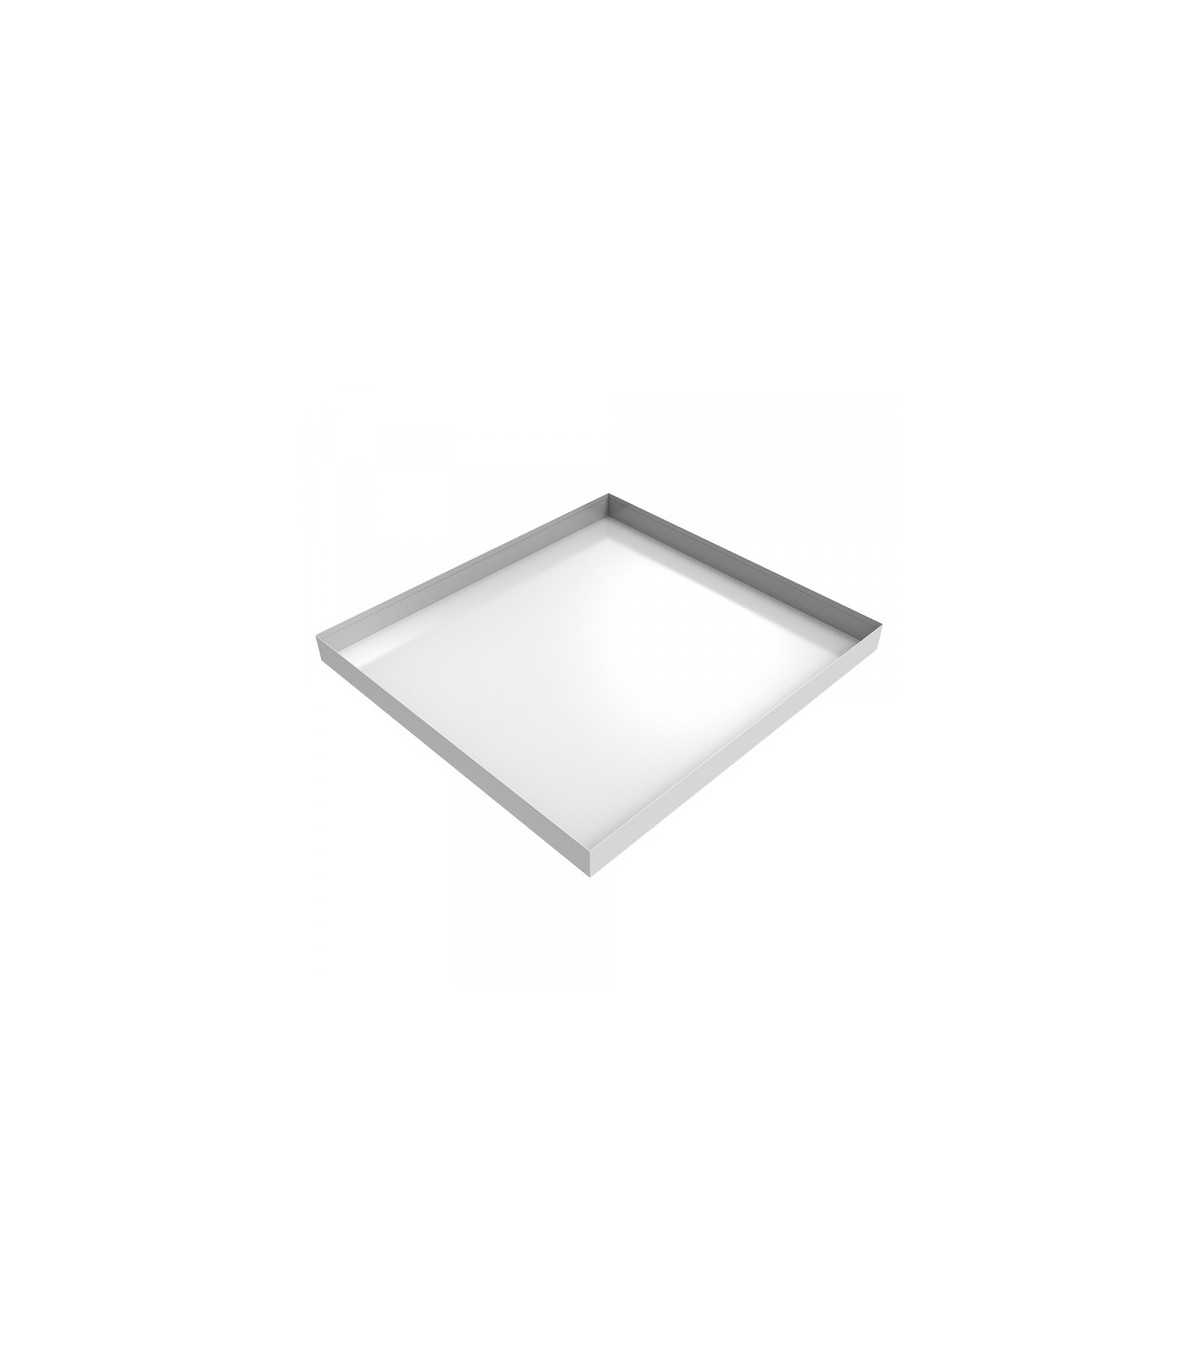 White Compact Washer Floor Tray - 27" x 25" x 2.5" | Steel - Killarney Metals